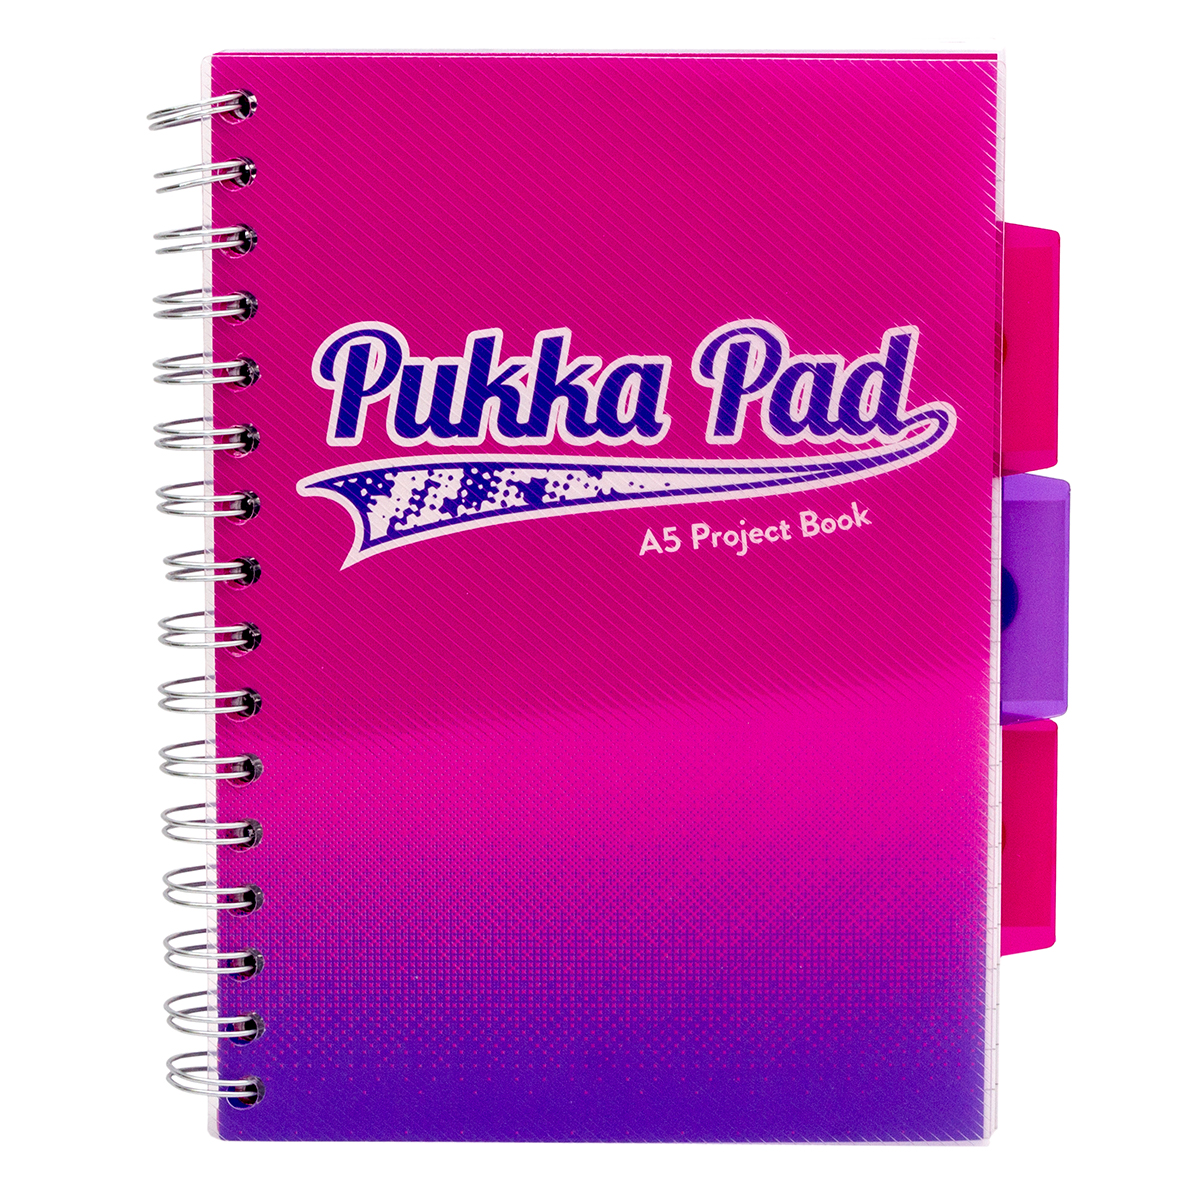 Caiet cu spirala si separatoare Pukka Project Book Fusion A5, roz, Matematica